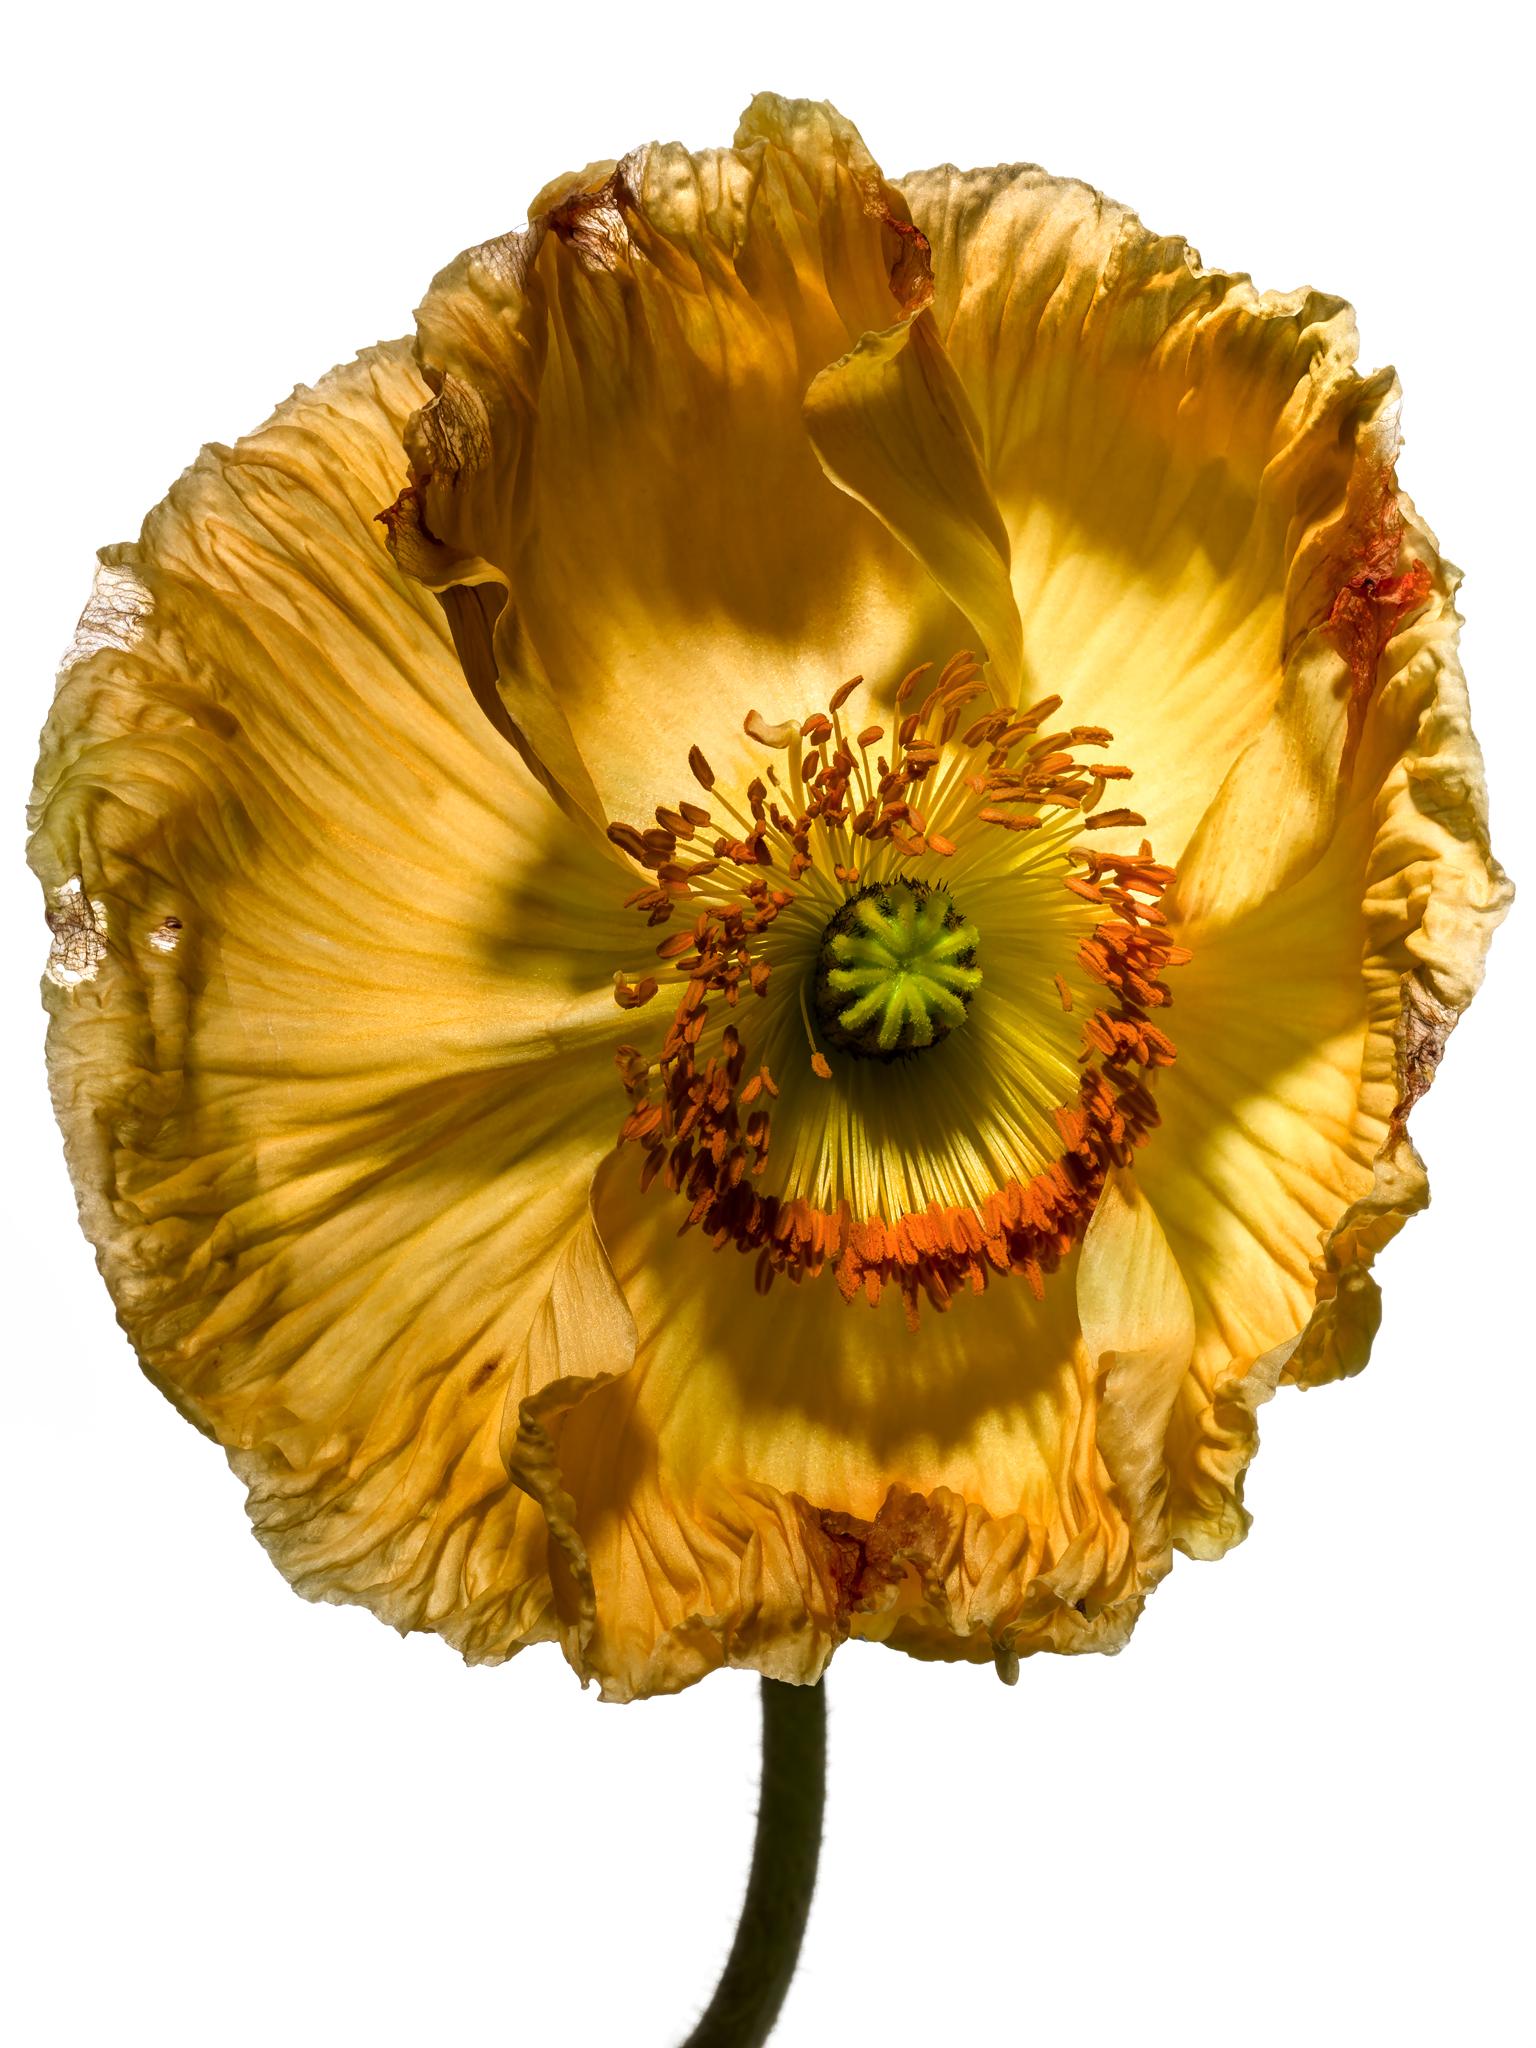 Linda Rosewall Color Photograph - Flora Italiana ( Papavero Giallo Fiorito ) - large format botanical still life